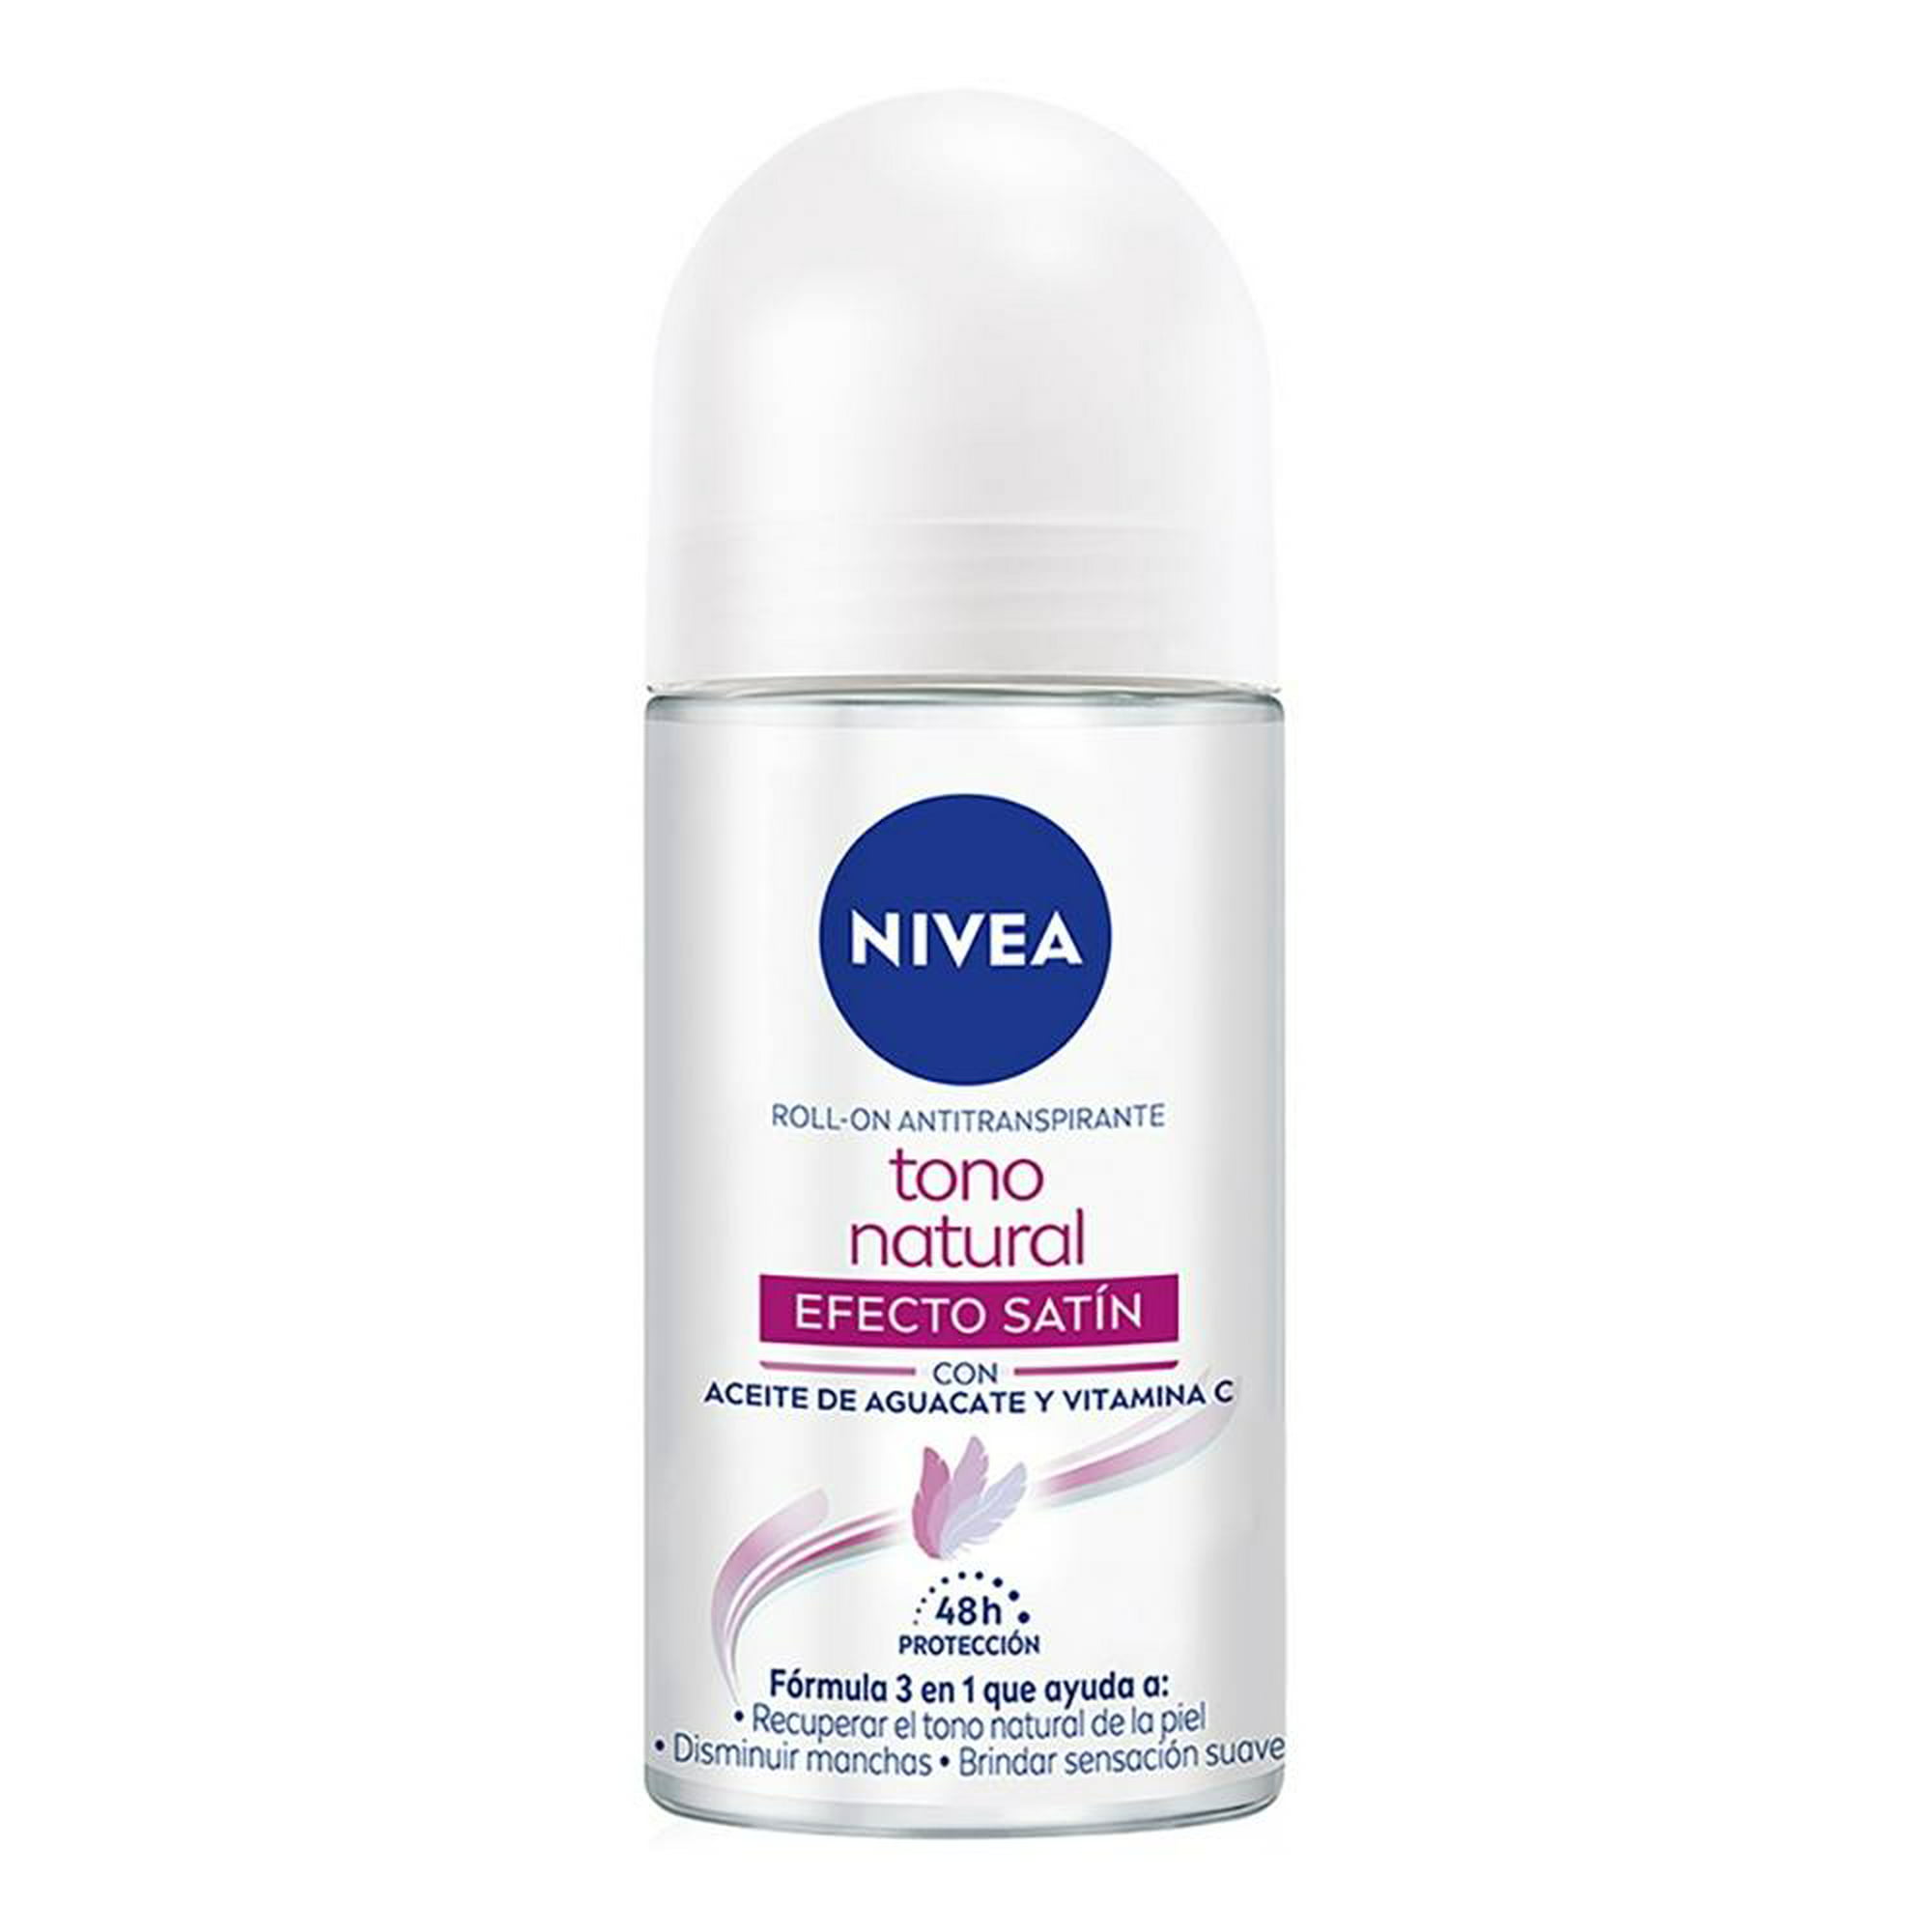 Nivea 4005808837472 50 ml Aclarado Natural Roll On Deodorant for Women - image 2 of 5